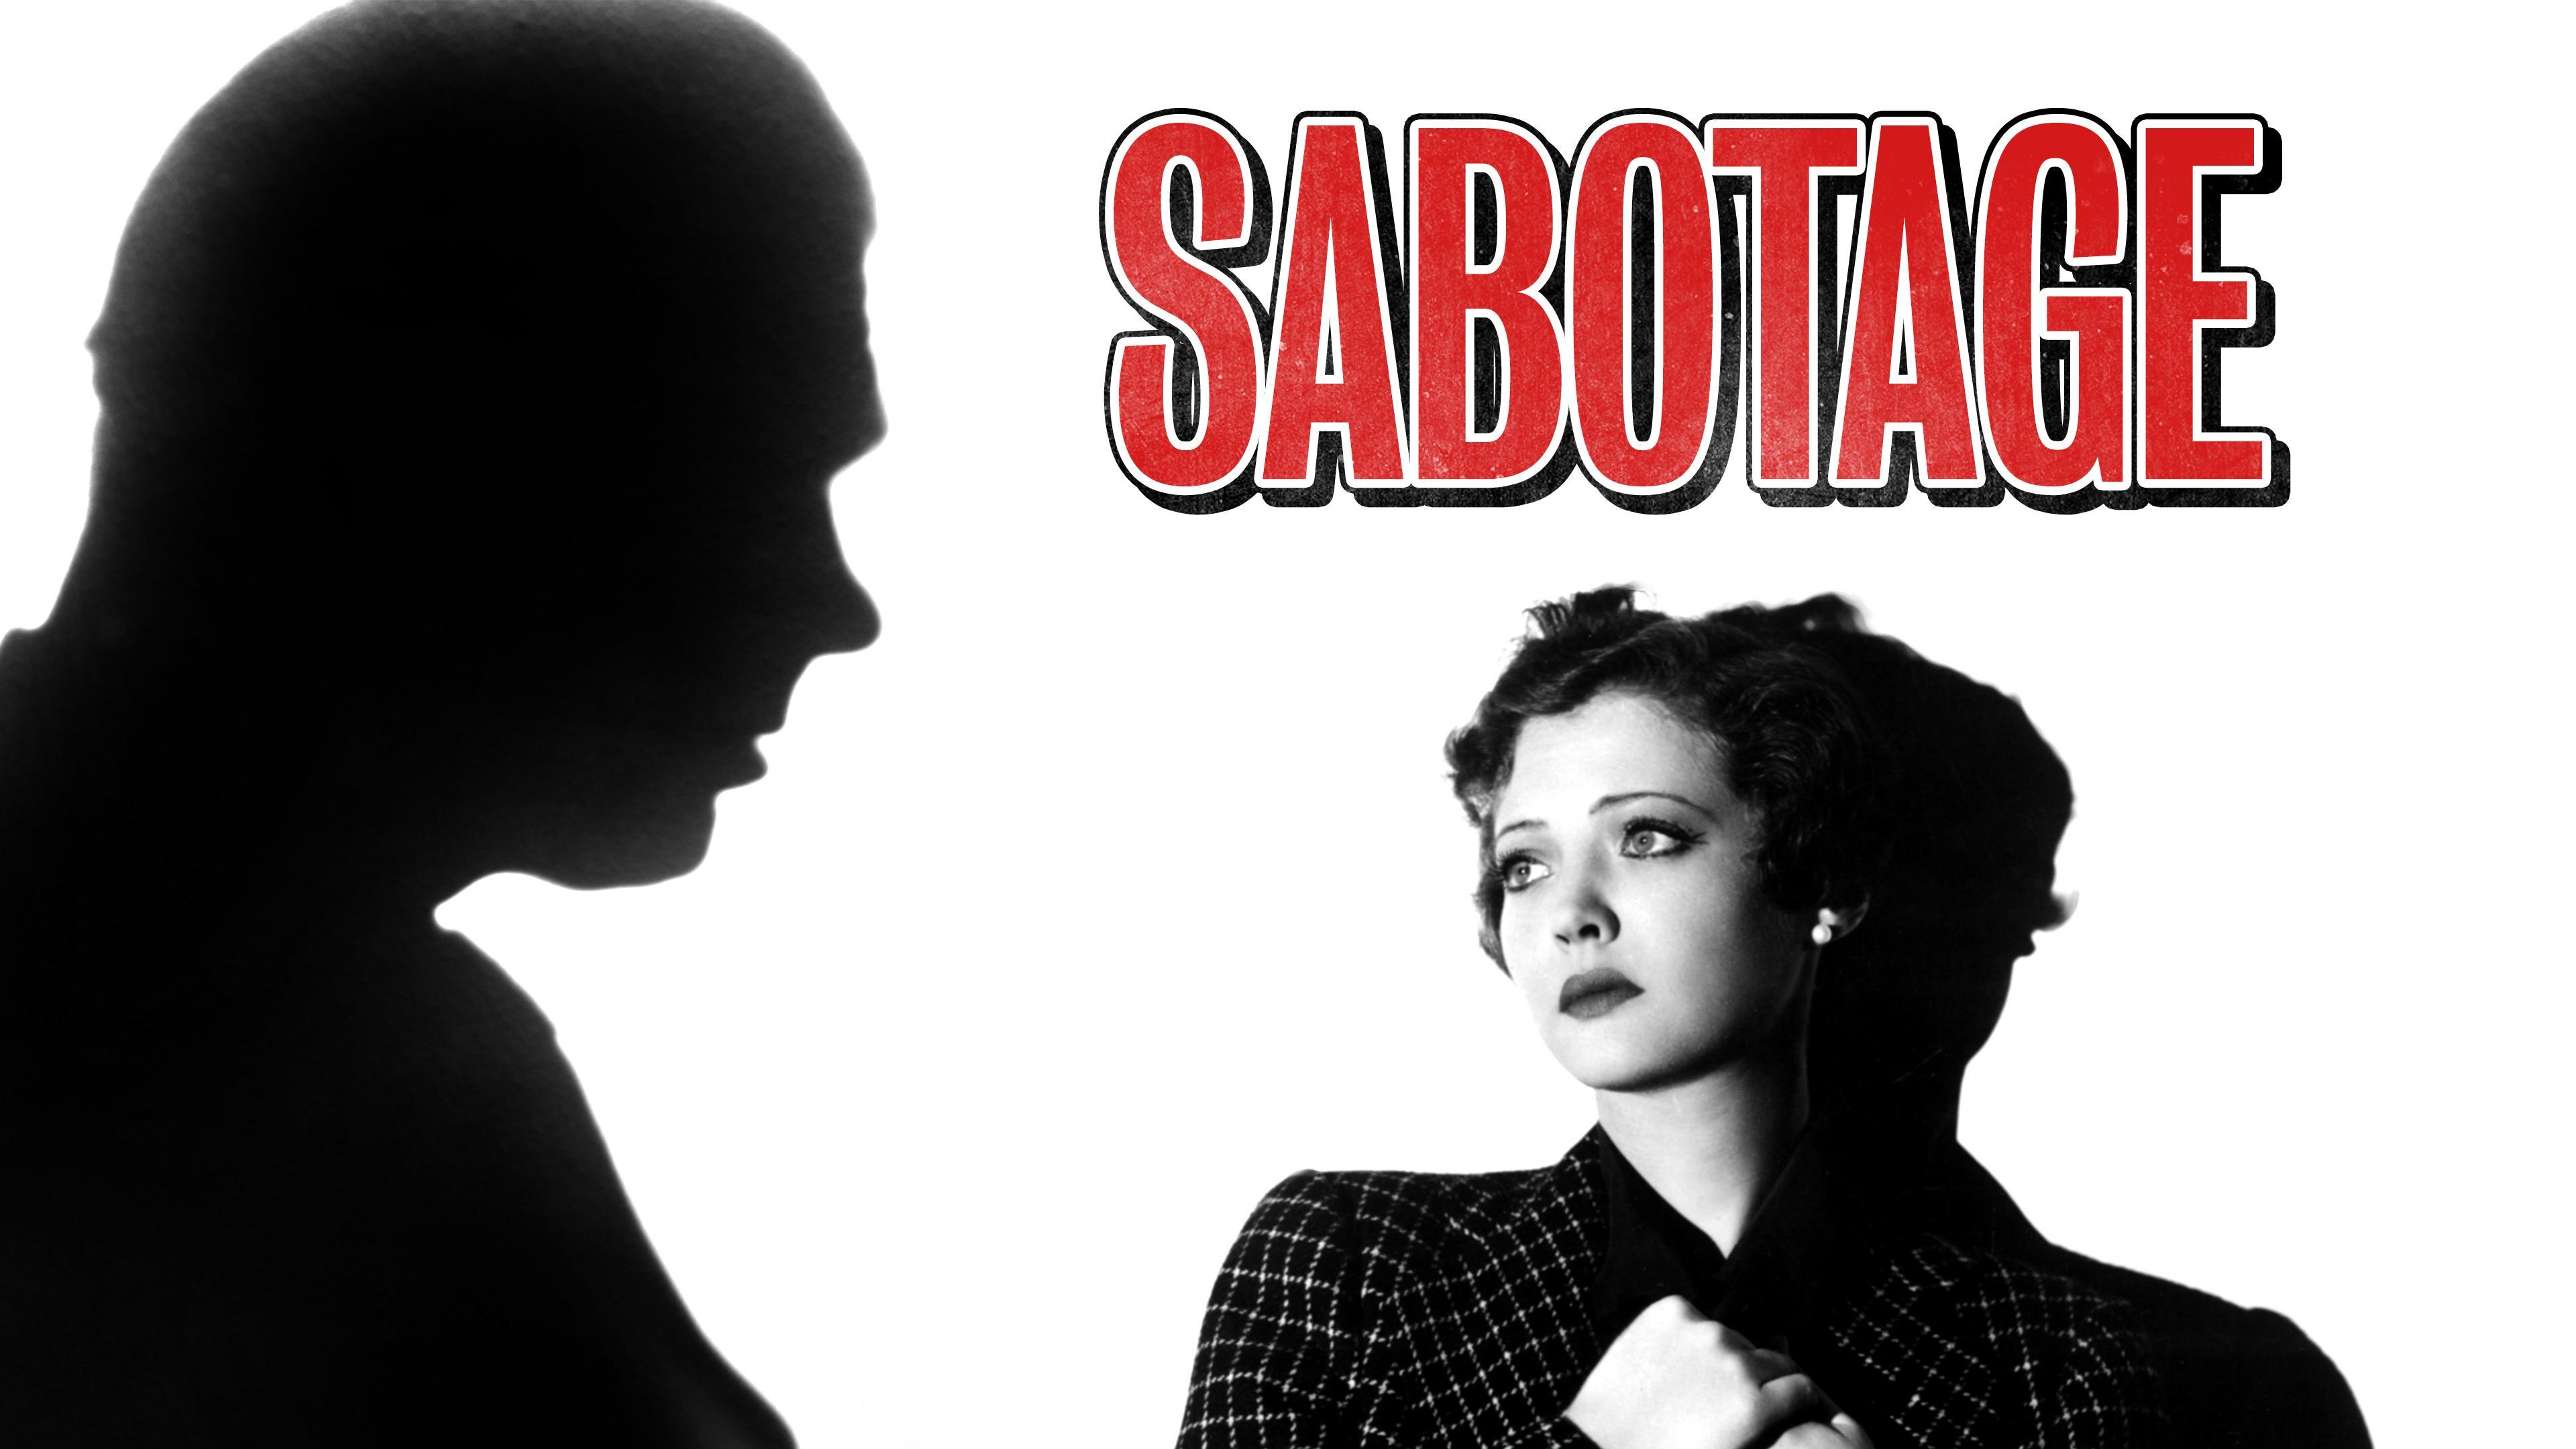 sabotage hitchcock movie poster